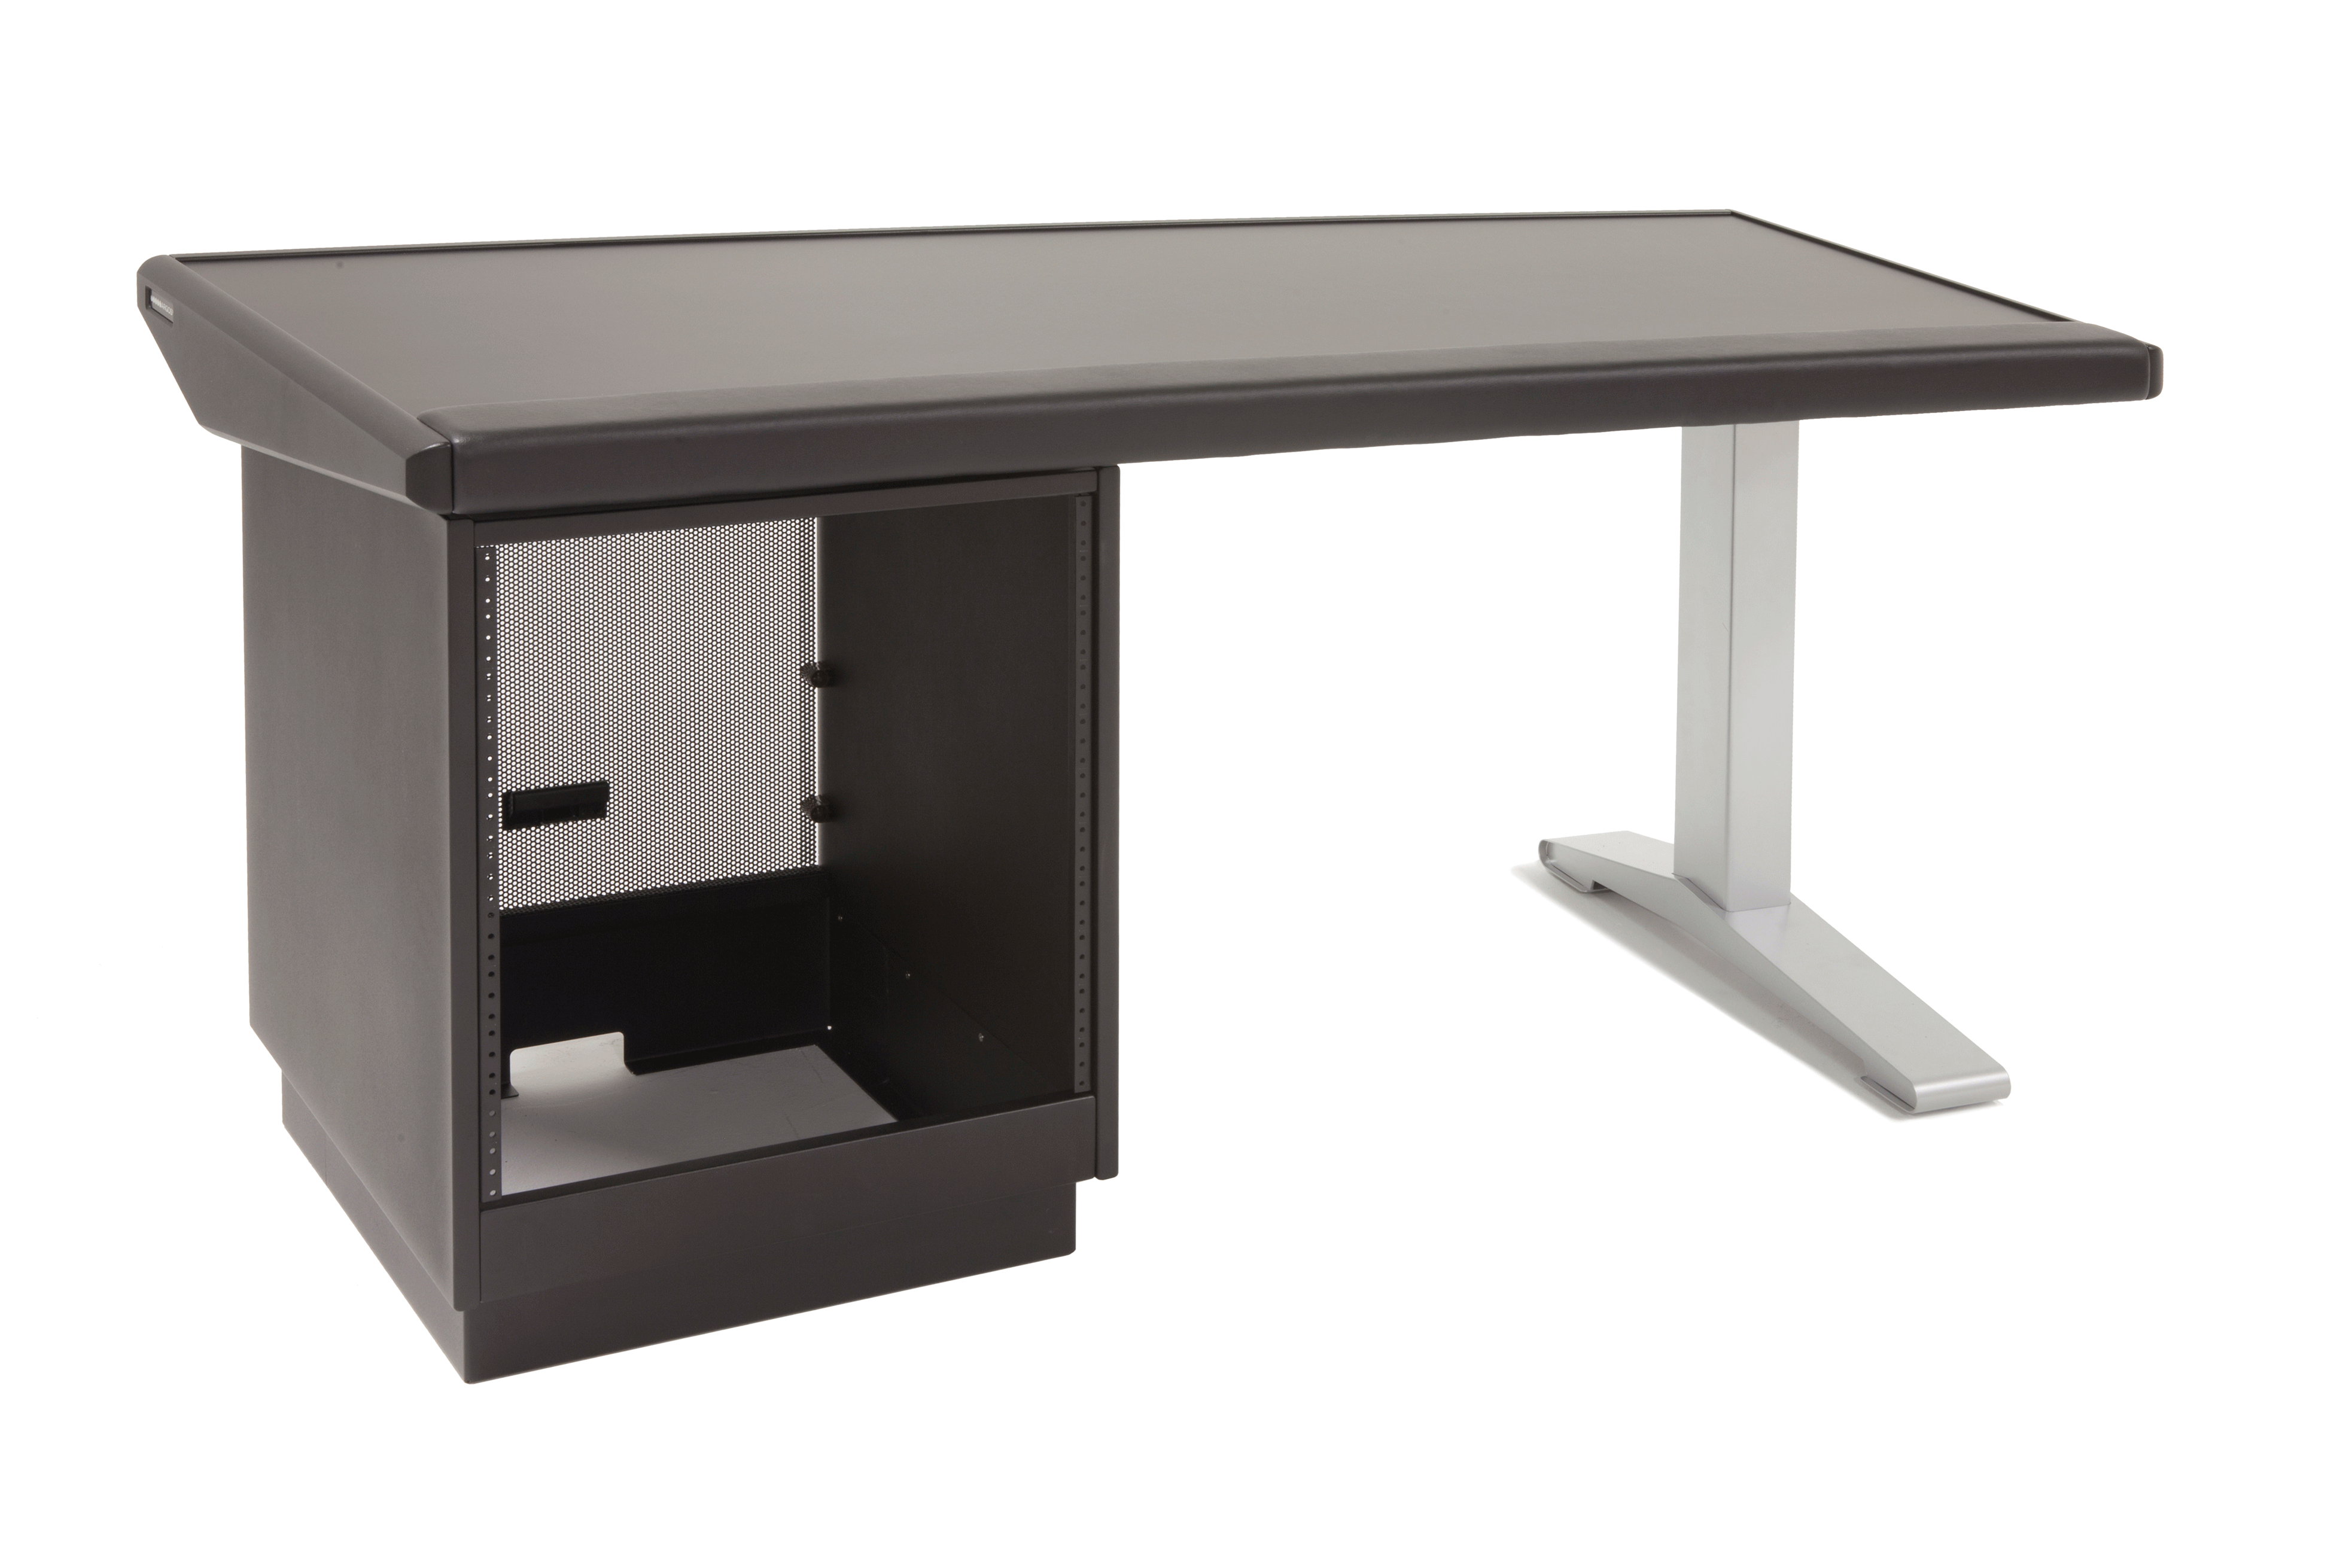 what argosy desk fits a behringer mx8000